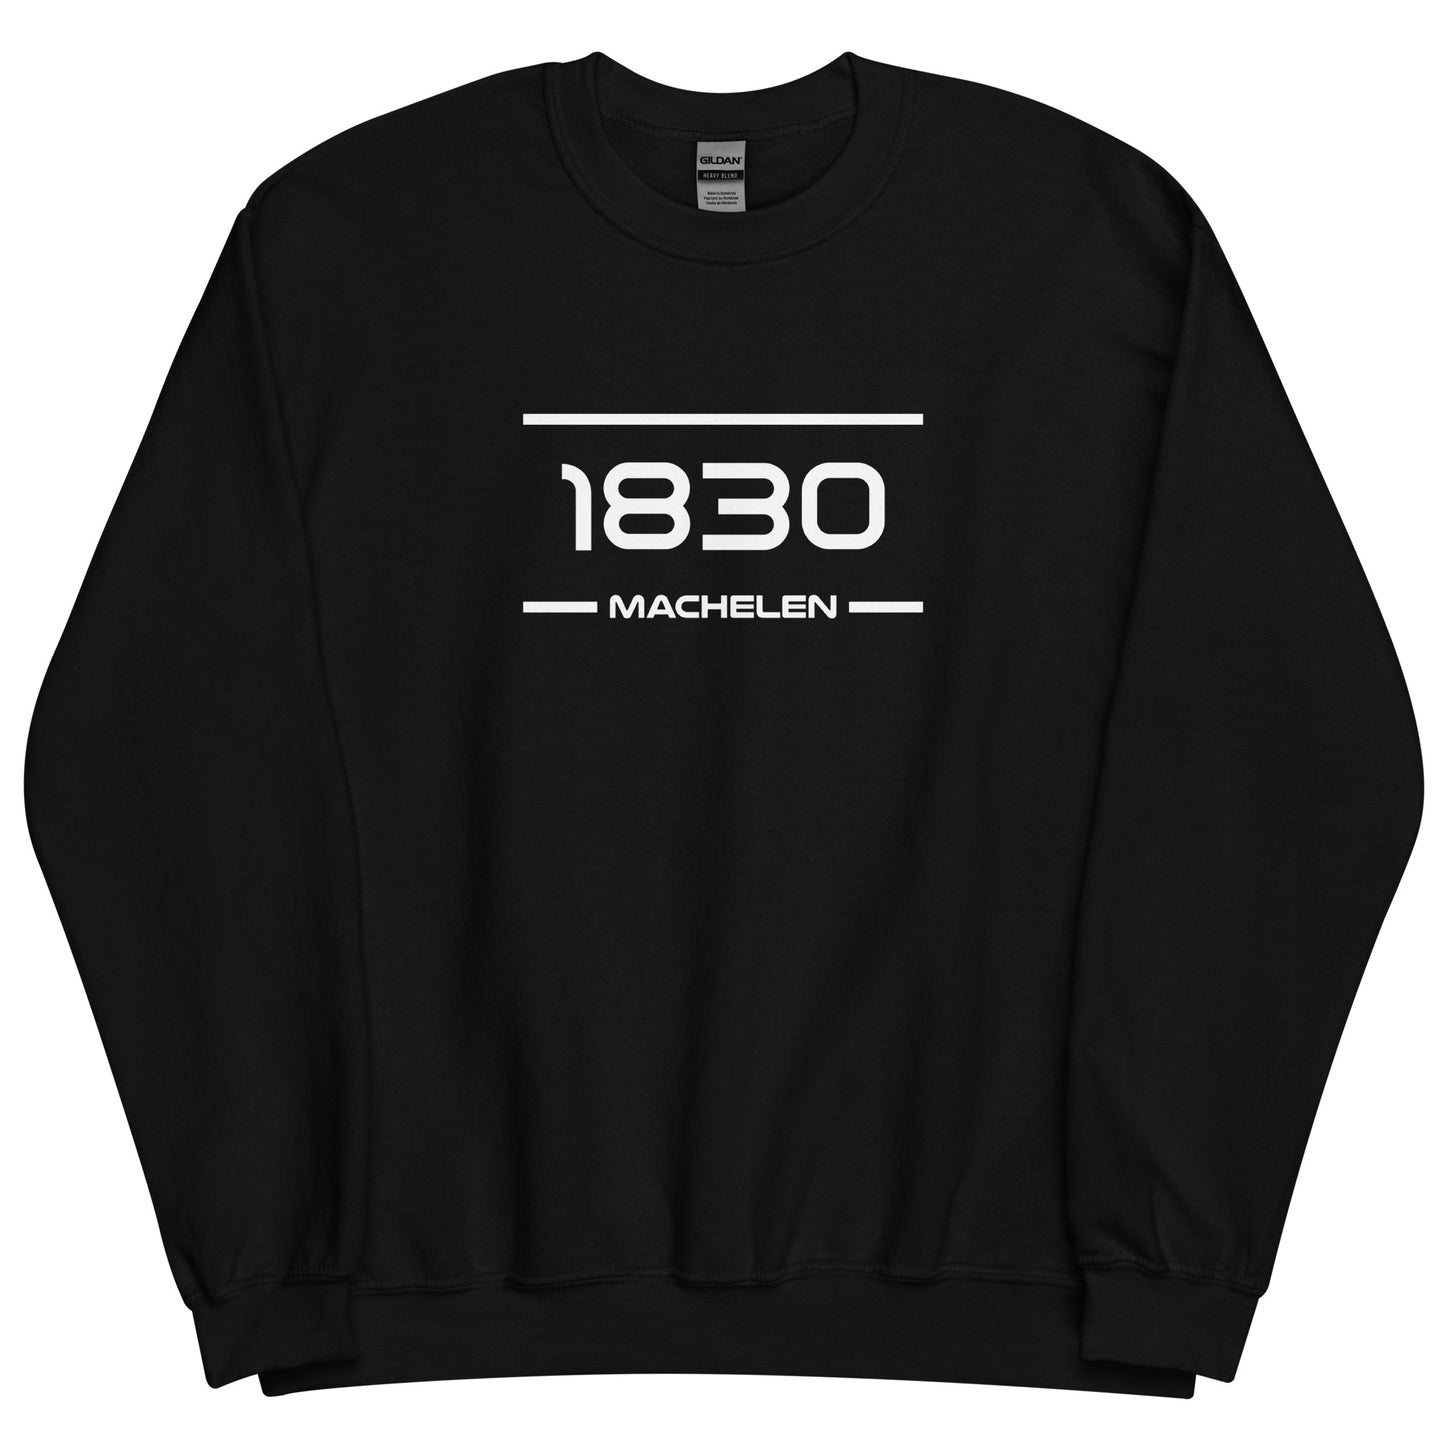 Sweater - 1830 - Machelen (M/V)